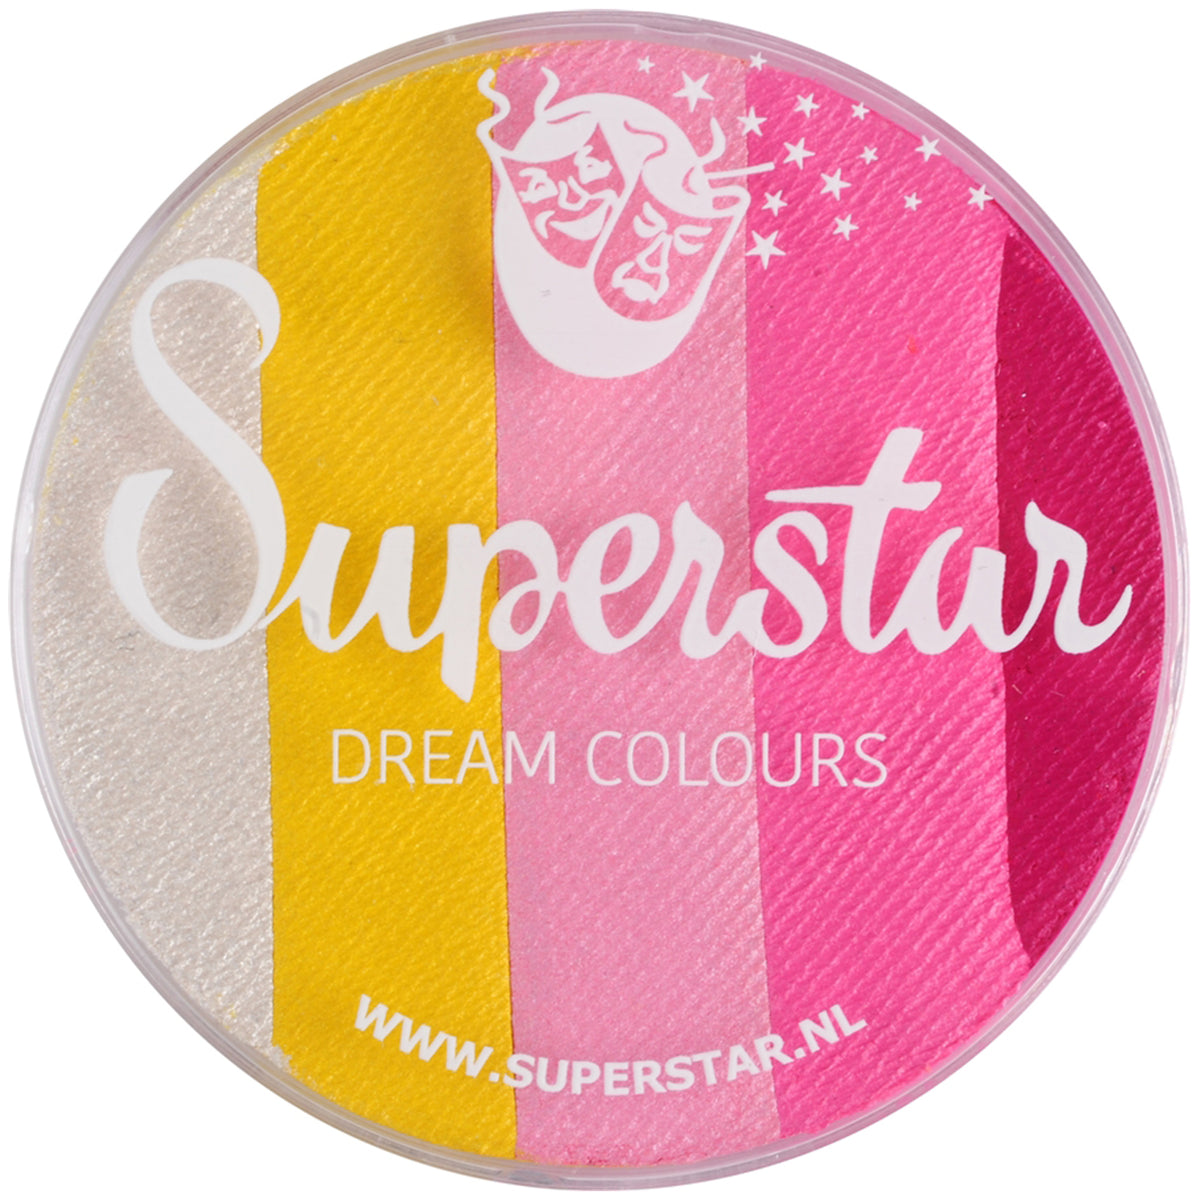 Superstar Dream Colours Rainbow Cake - Sweet #911 (45 gm/ 1.59 oz)